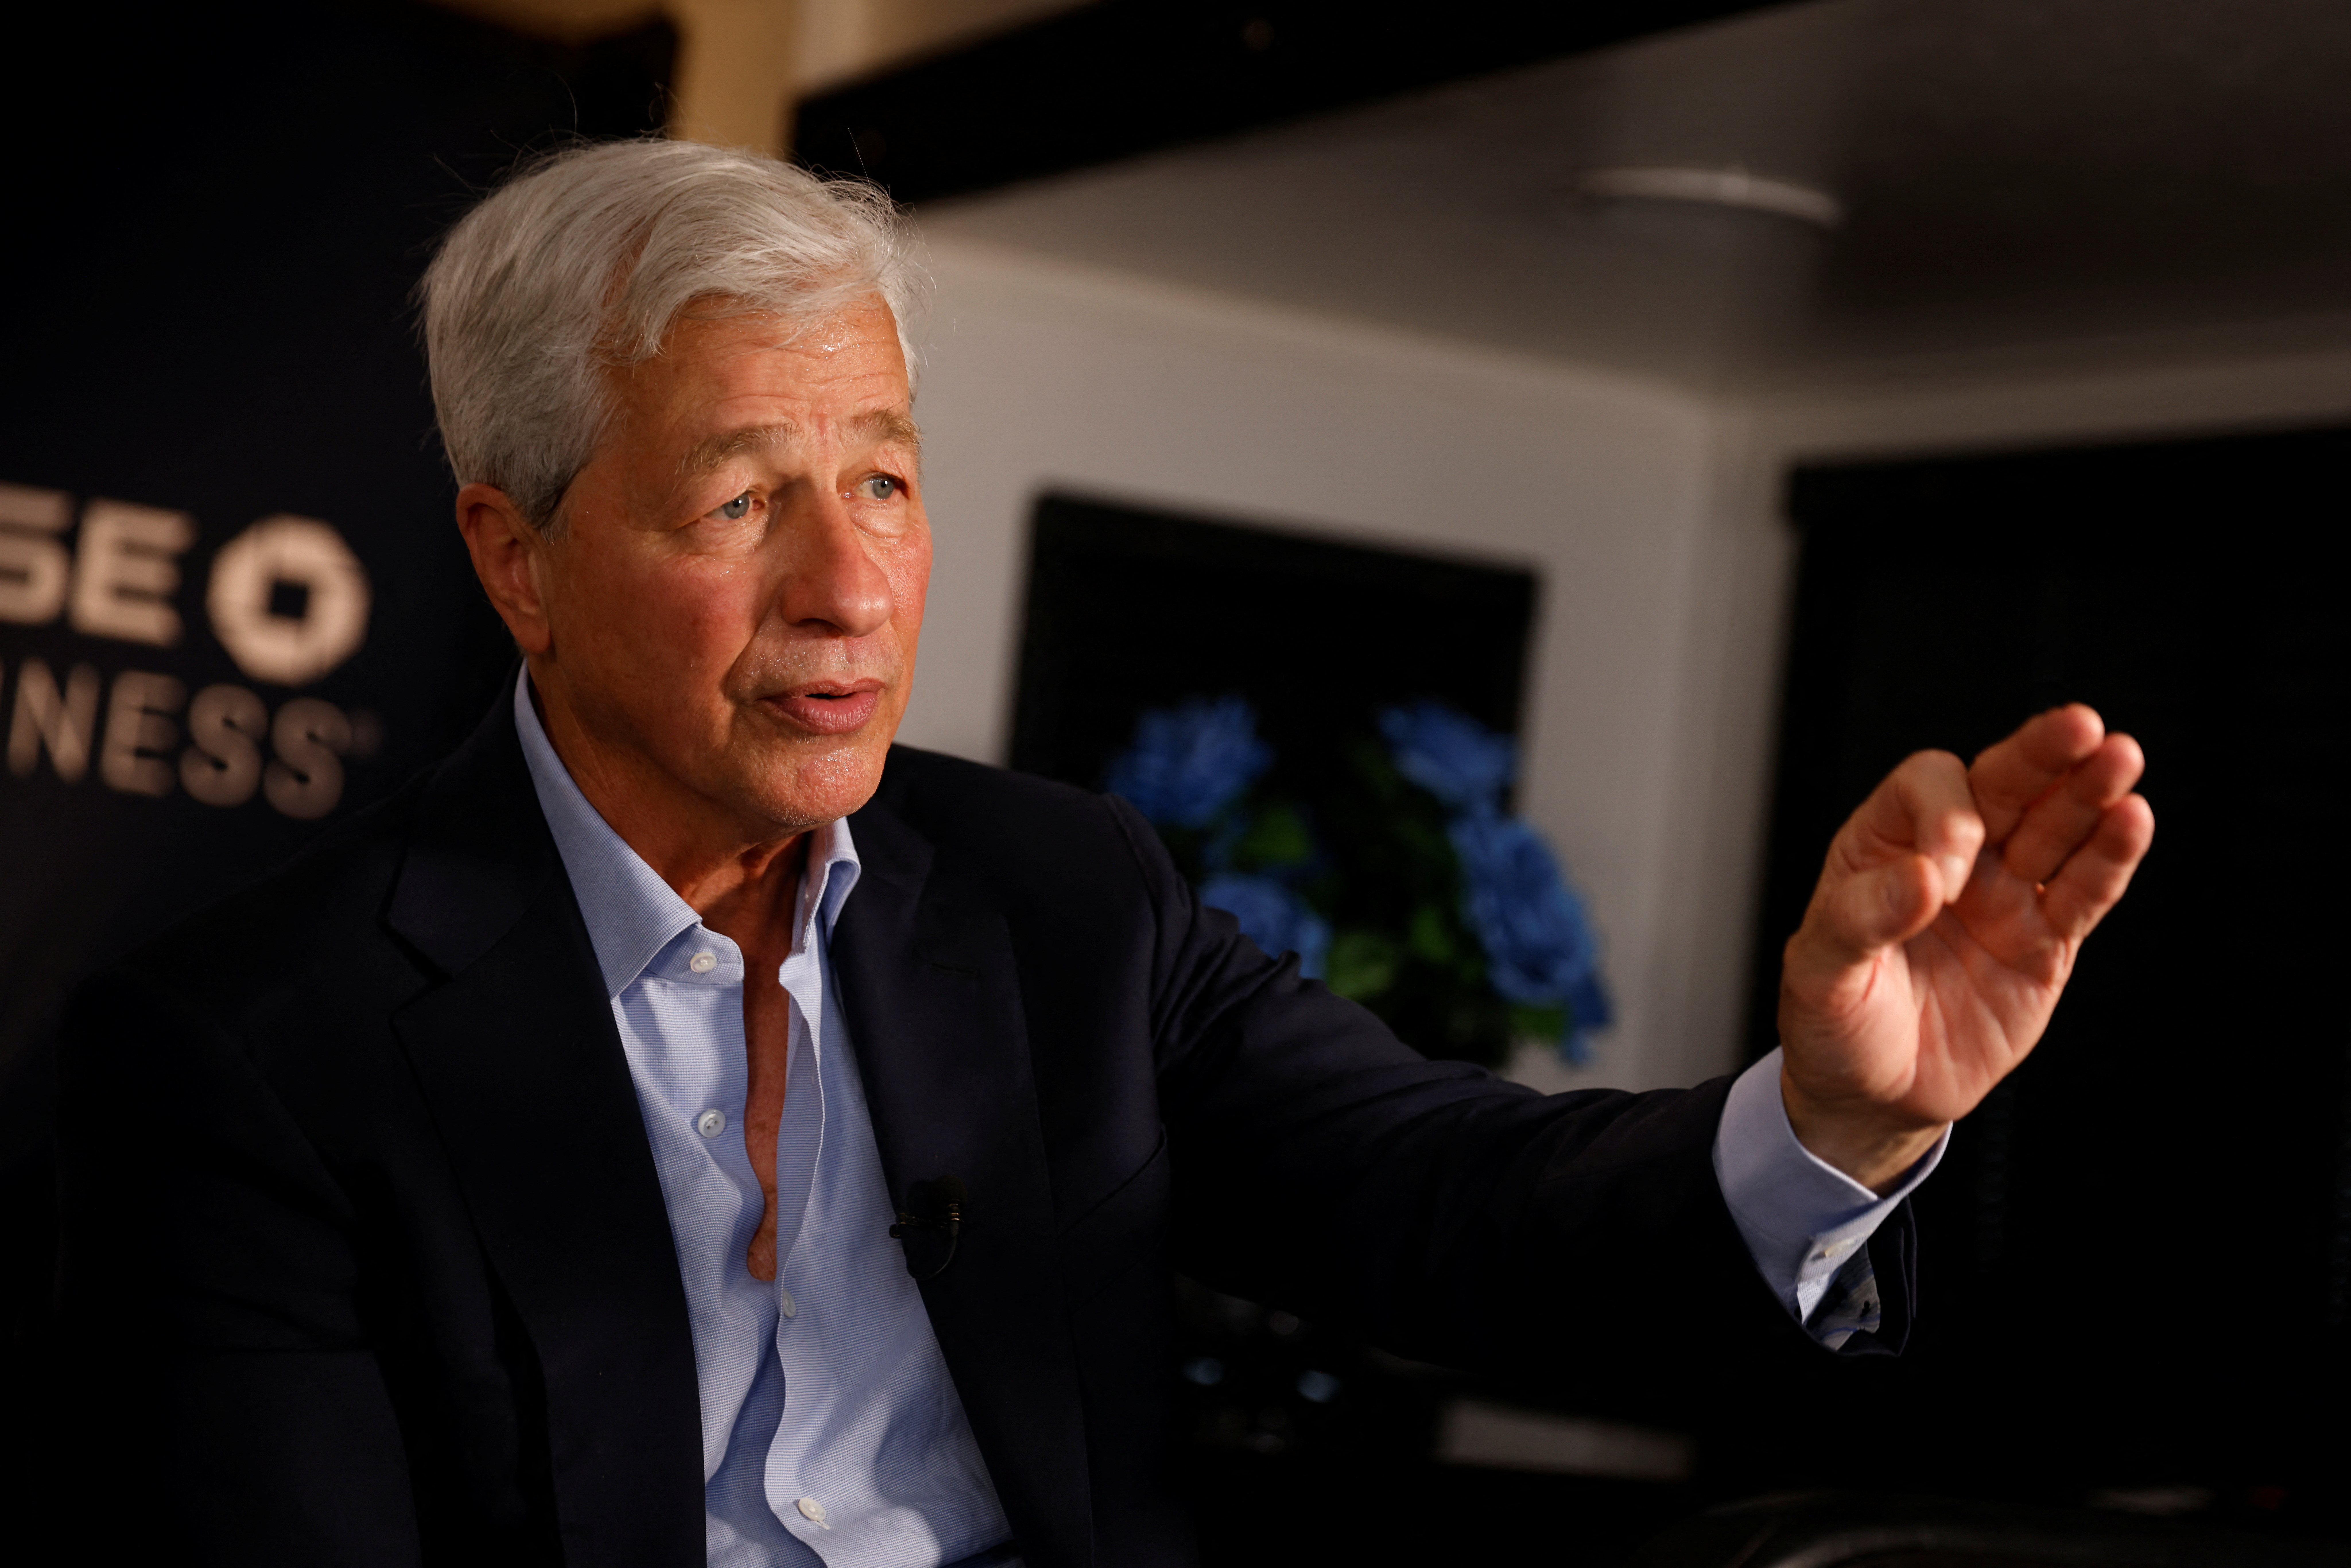 Reuters interviews JPMorgan Chase & Co. CEO Jamie Dimon in Miami, Florida